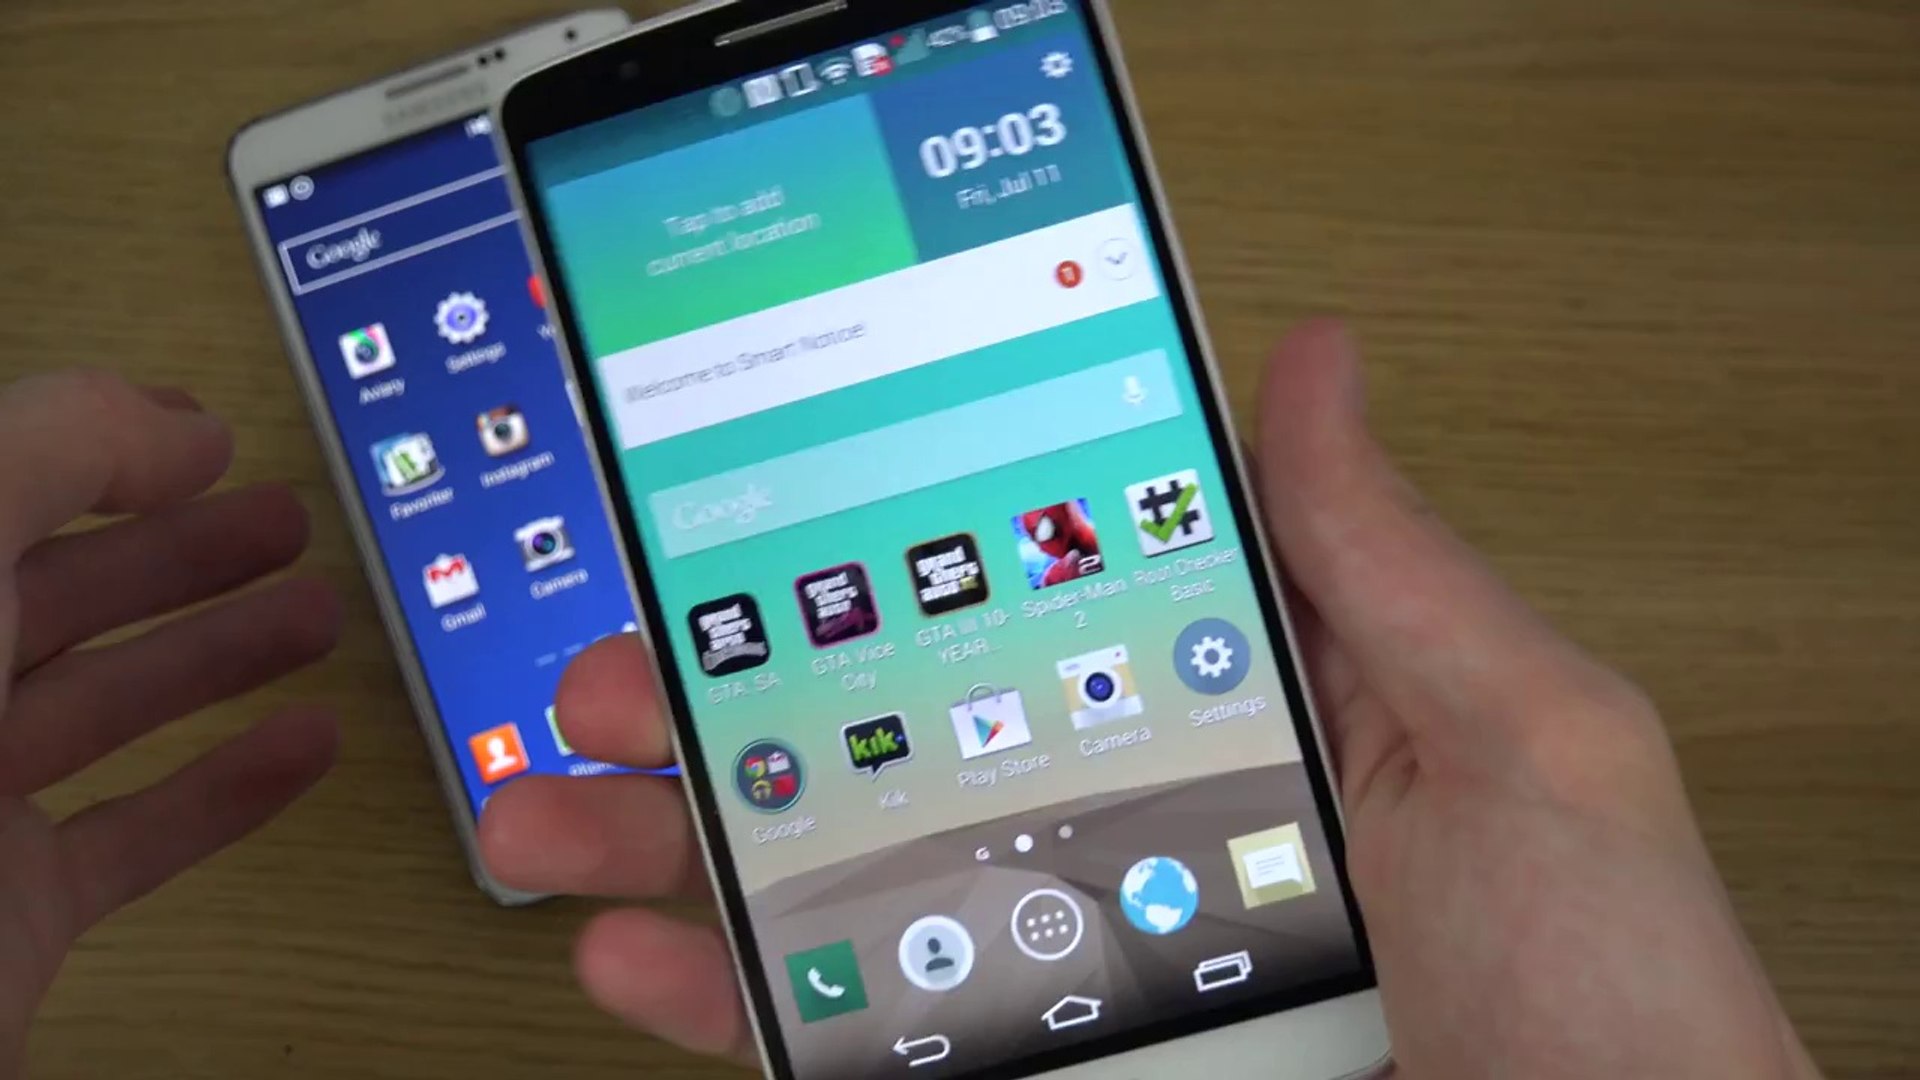 LG G3 vs. Samsung Galaxy Note 3 - Review (4K) - video Dailymotion